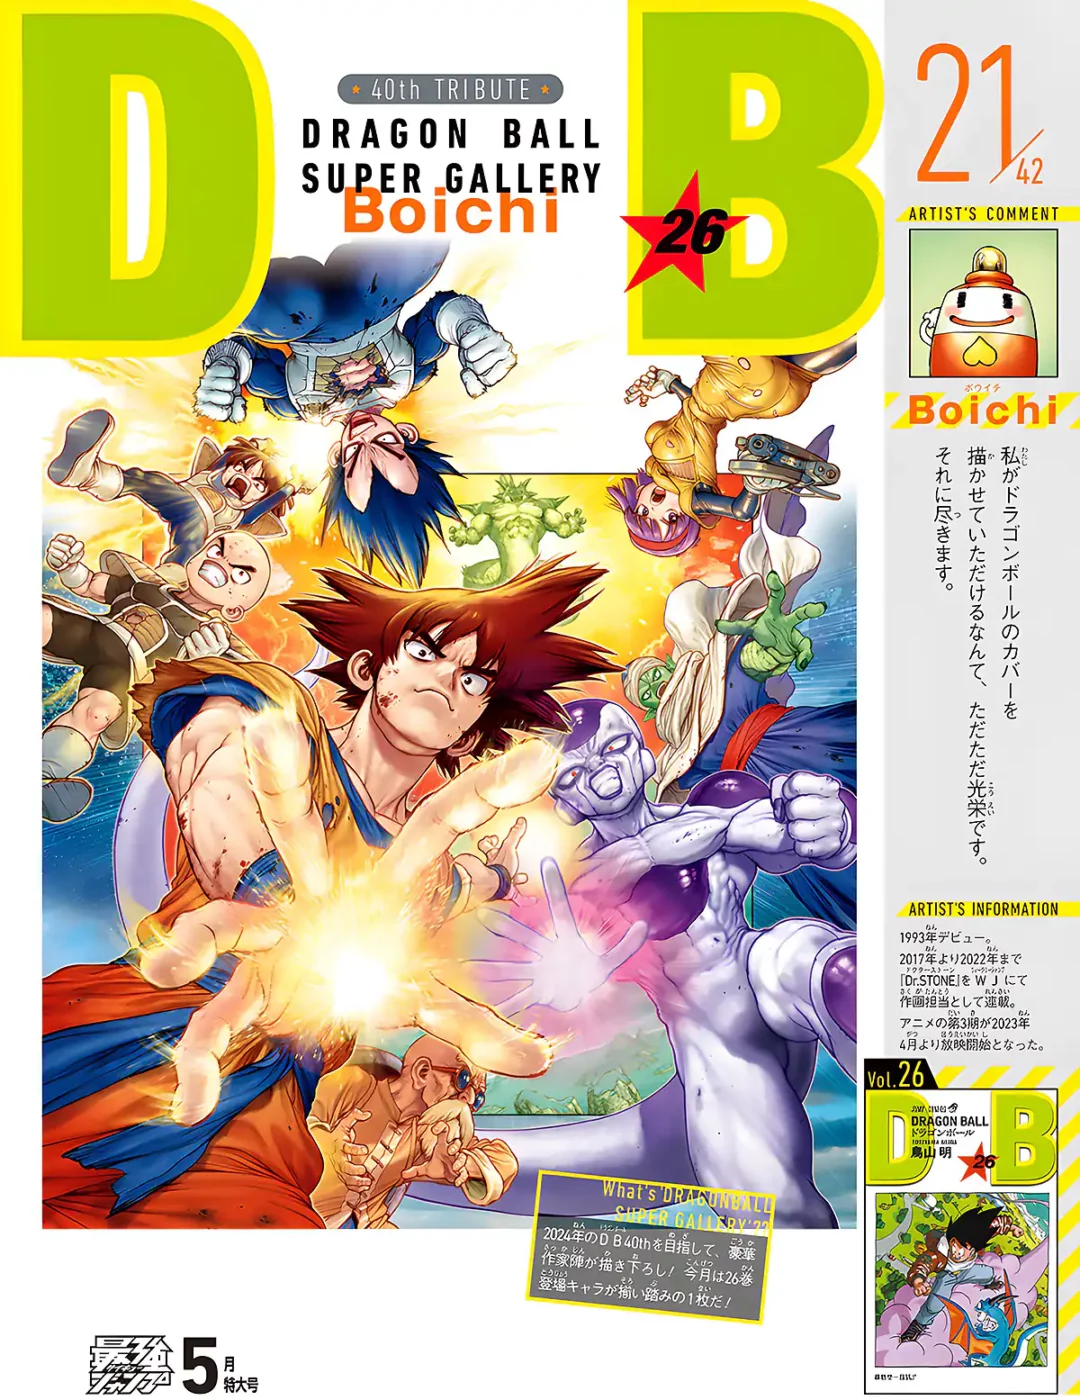 Dragon Ball Super Gallery 21 Boichi